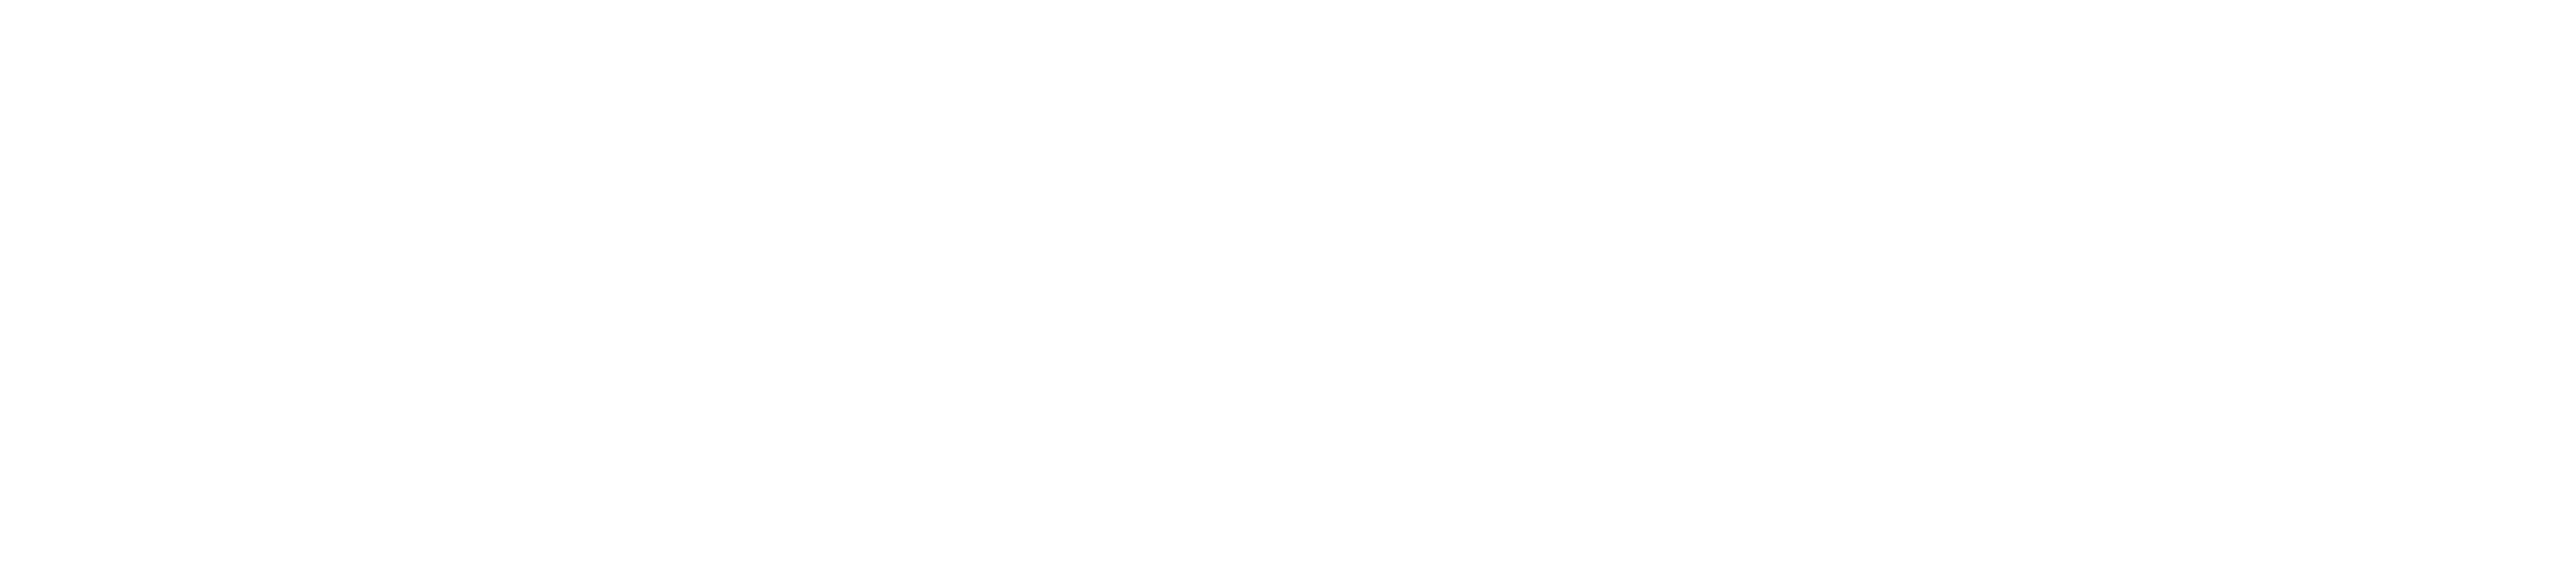 Star Wars Galactic Starcruiser - Logo